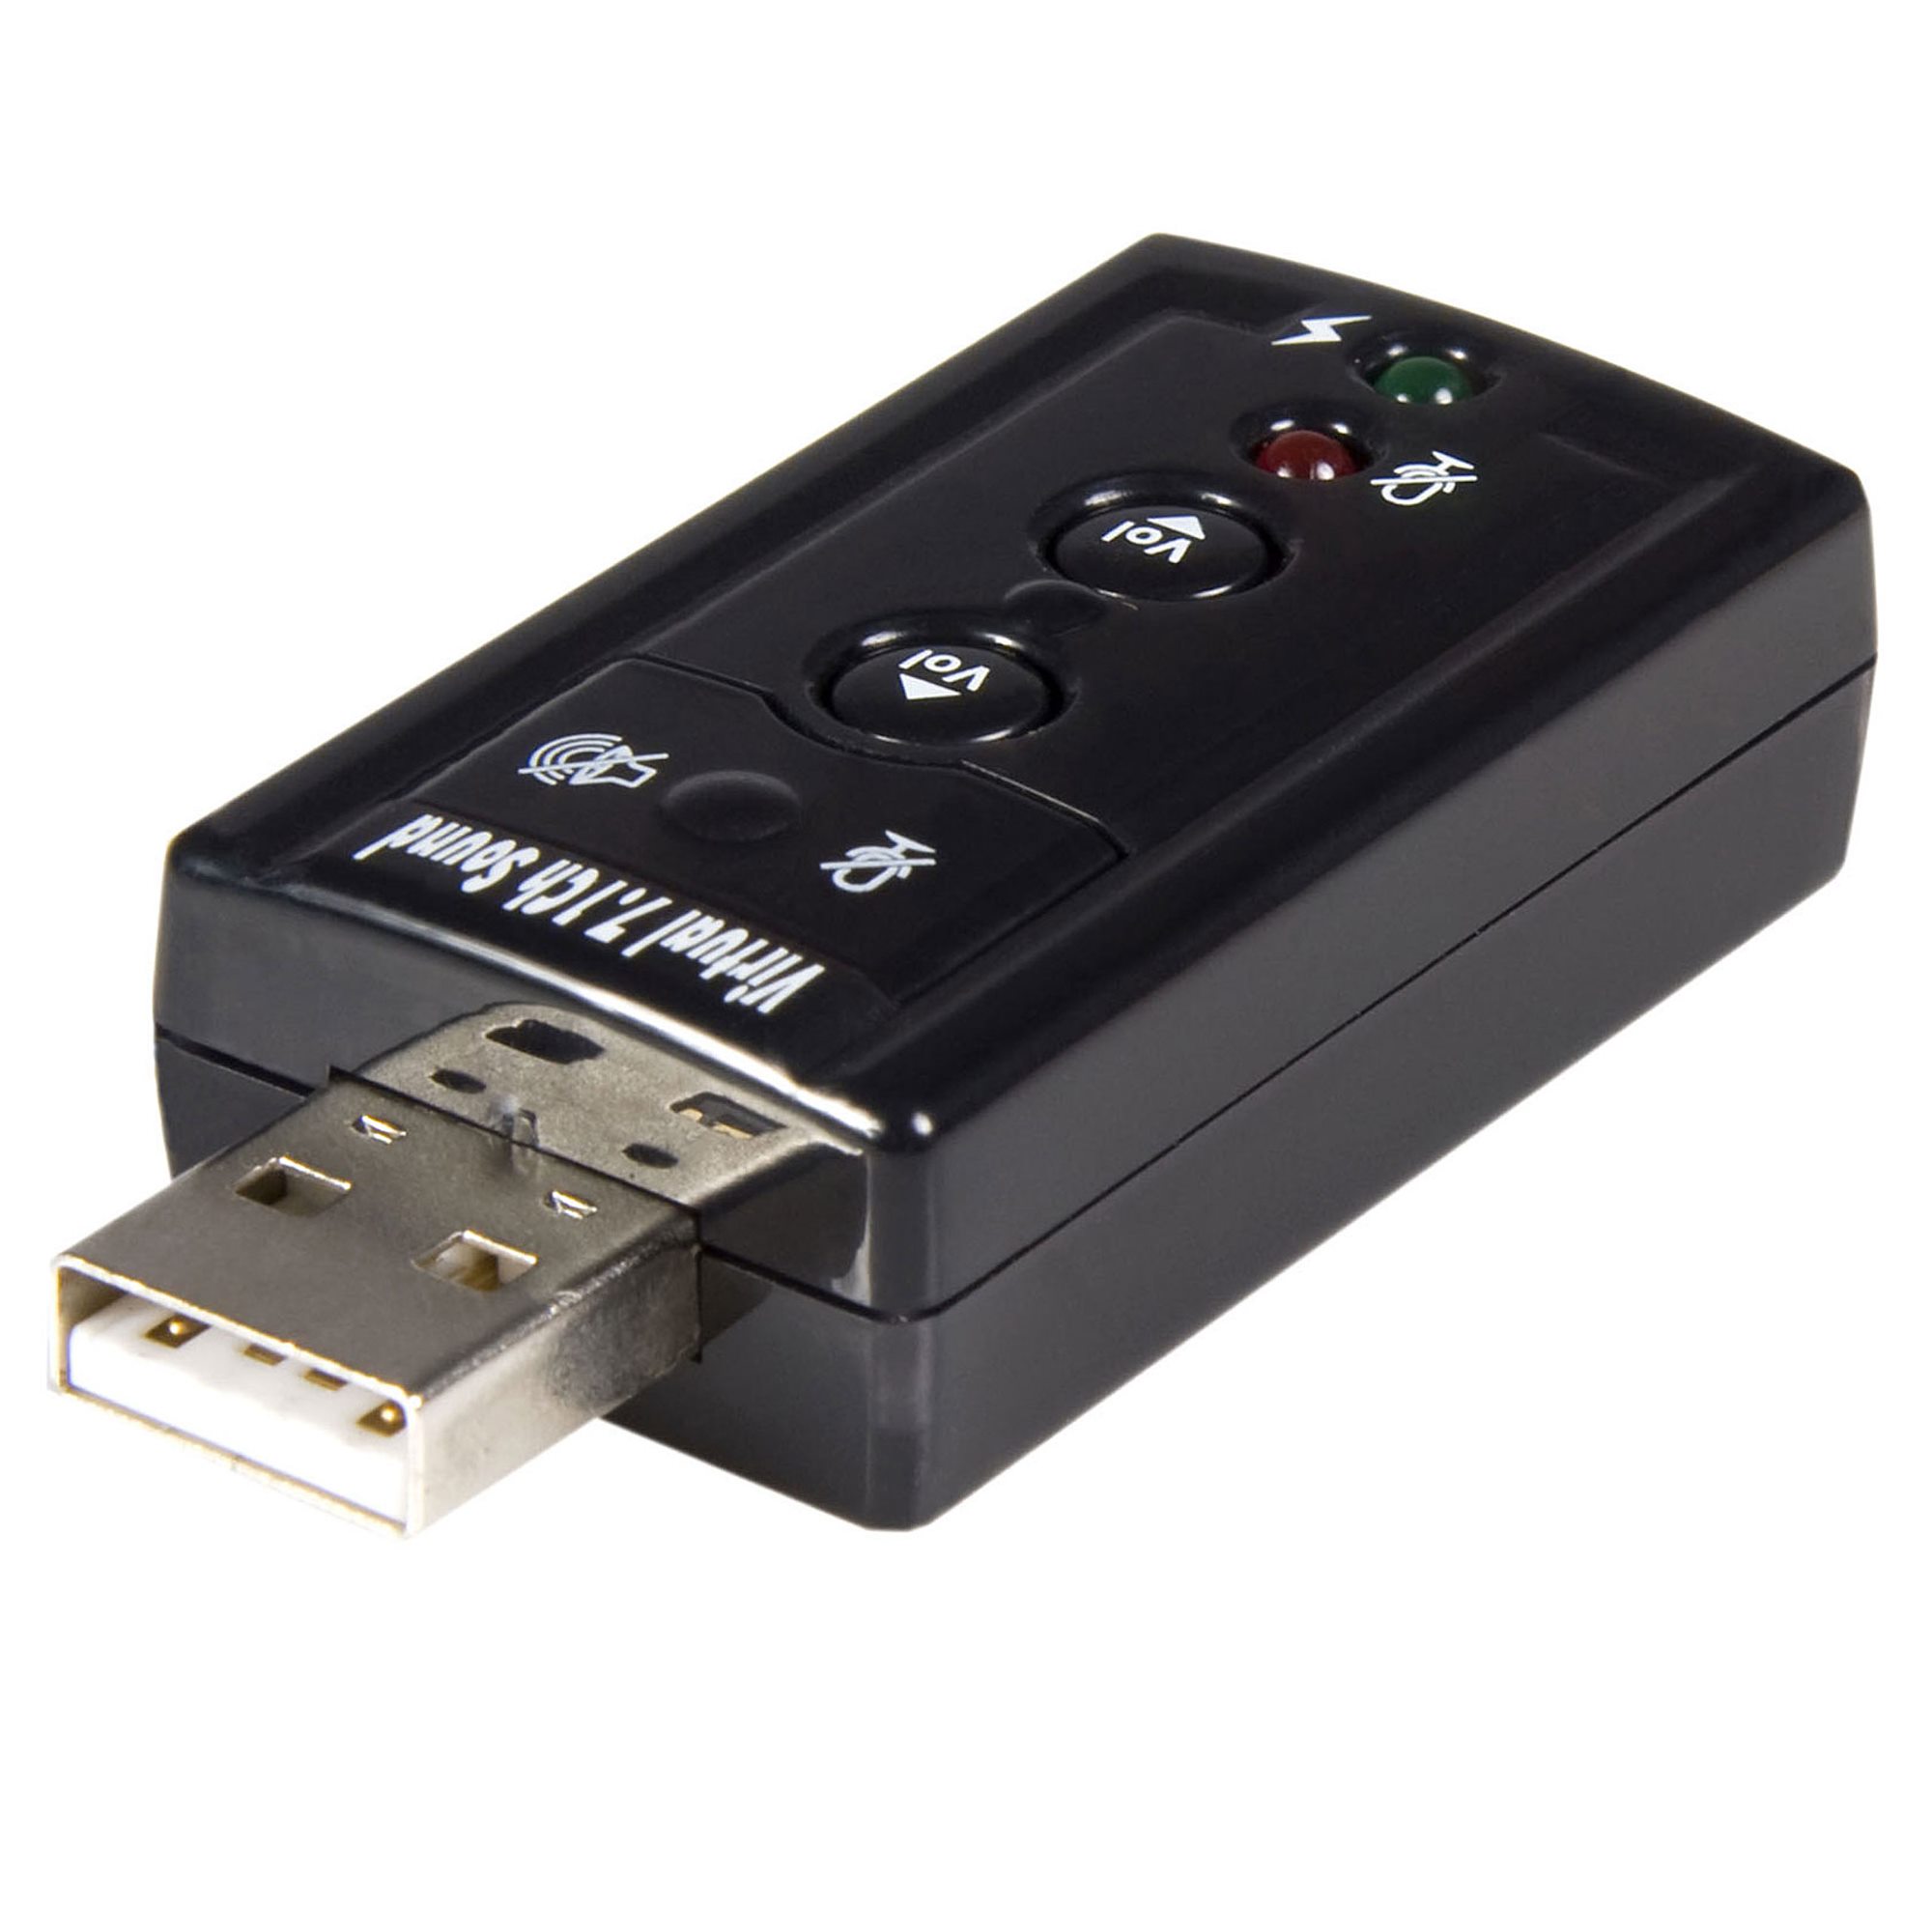 7.1 USB Stereo Audio Adapter - USB Audio Adapters | Europe